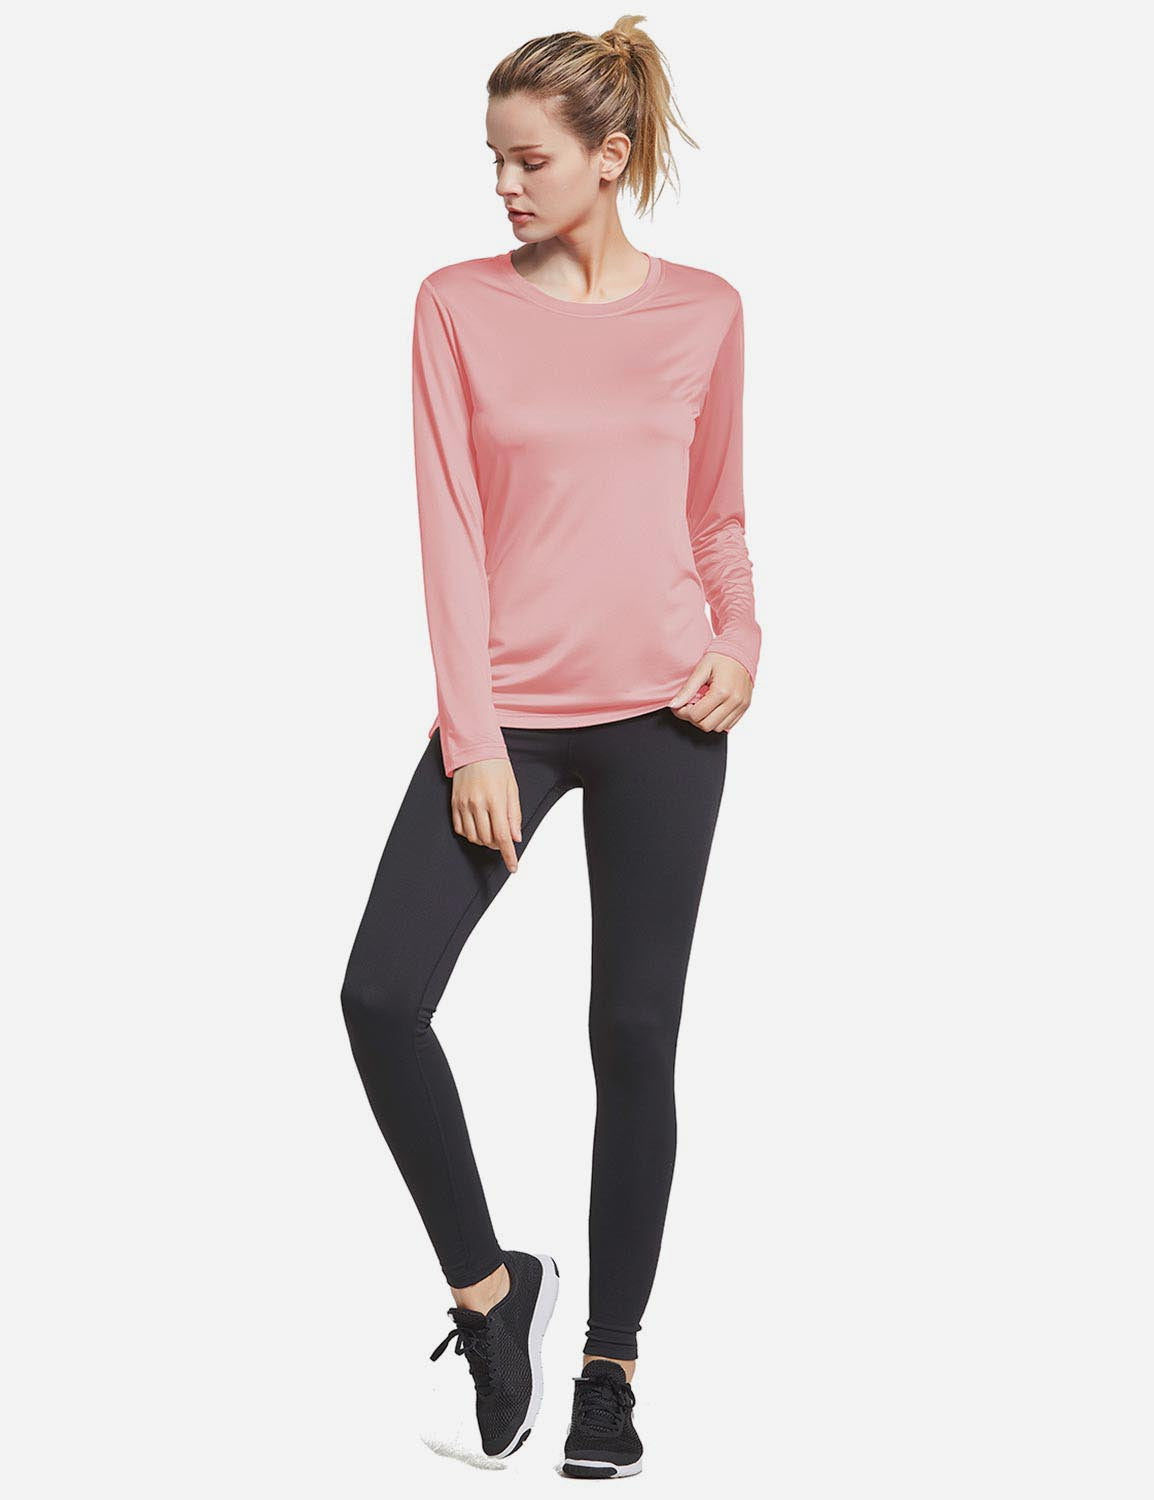 BALEAF Women's Loose Fit Tagless Workout Long Sleeved Shirt abd294 Pink Full